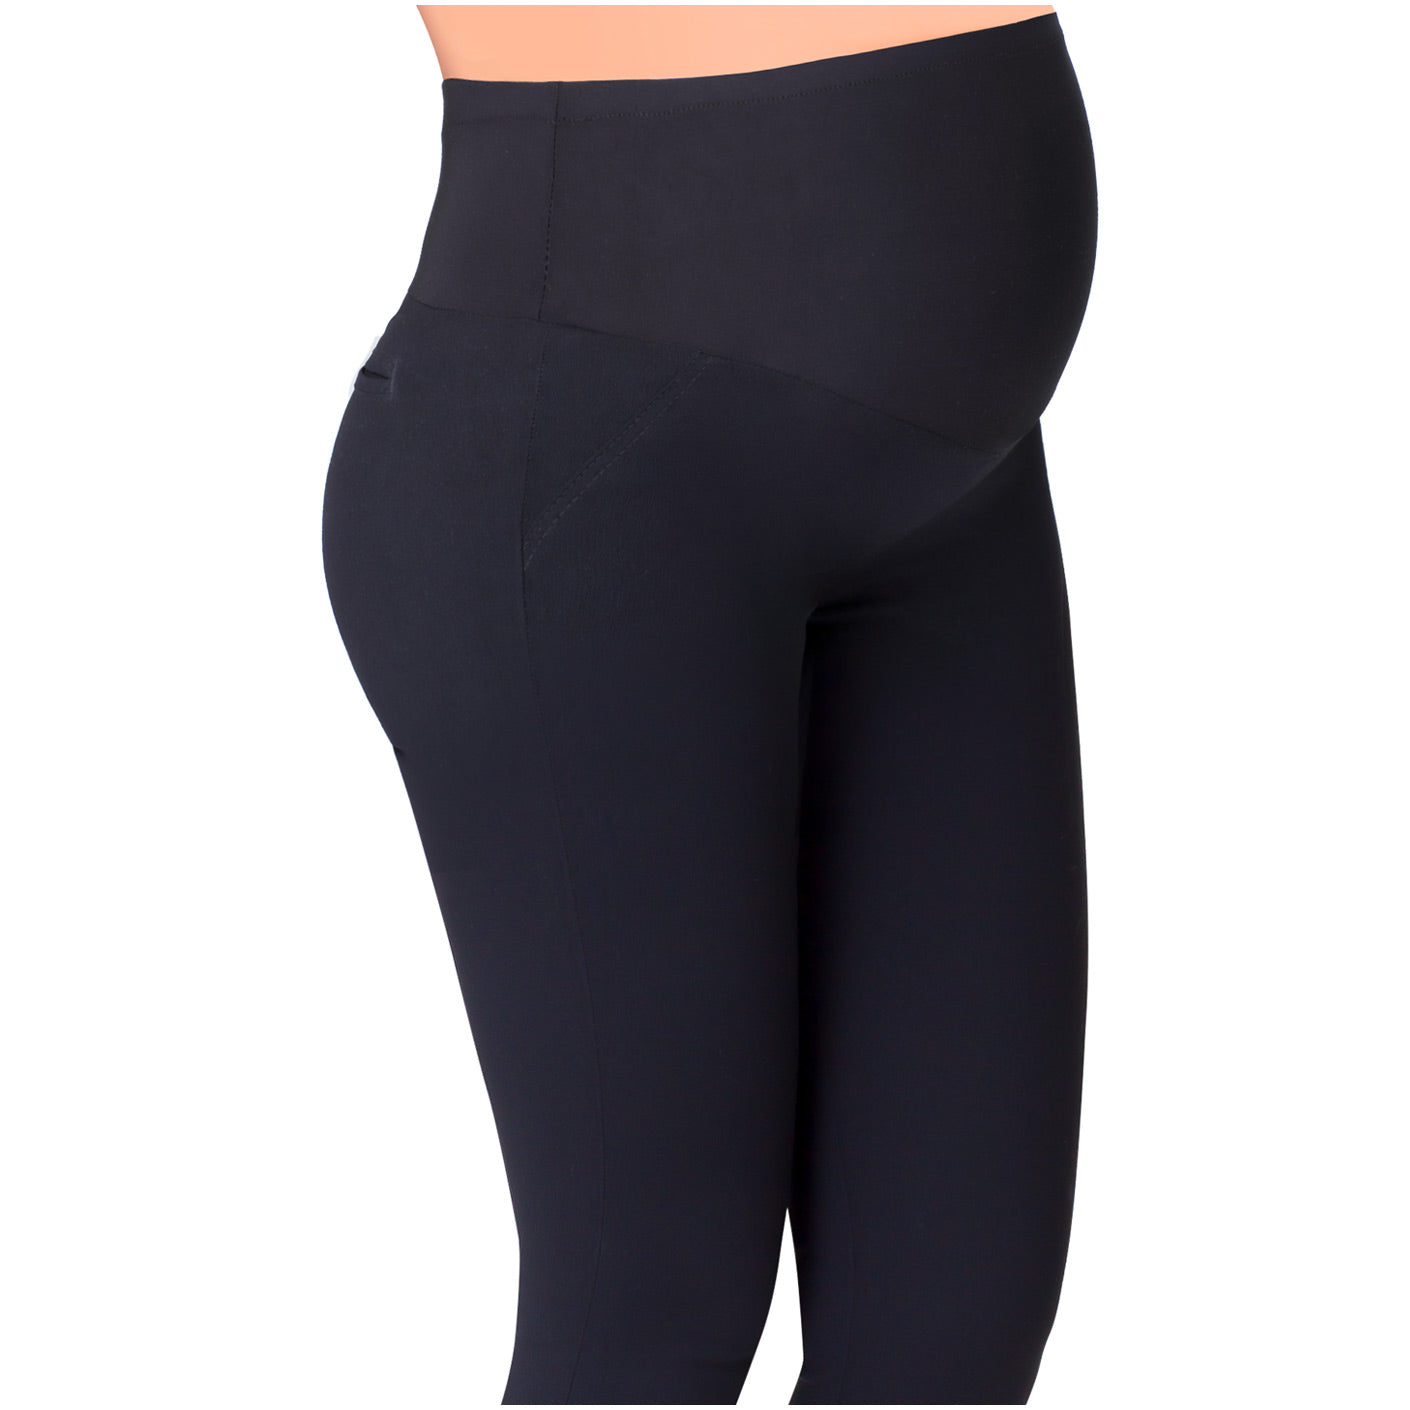 Lowla Jeans: M219900 - Maternity Butt Lifting Skinny Pants